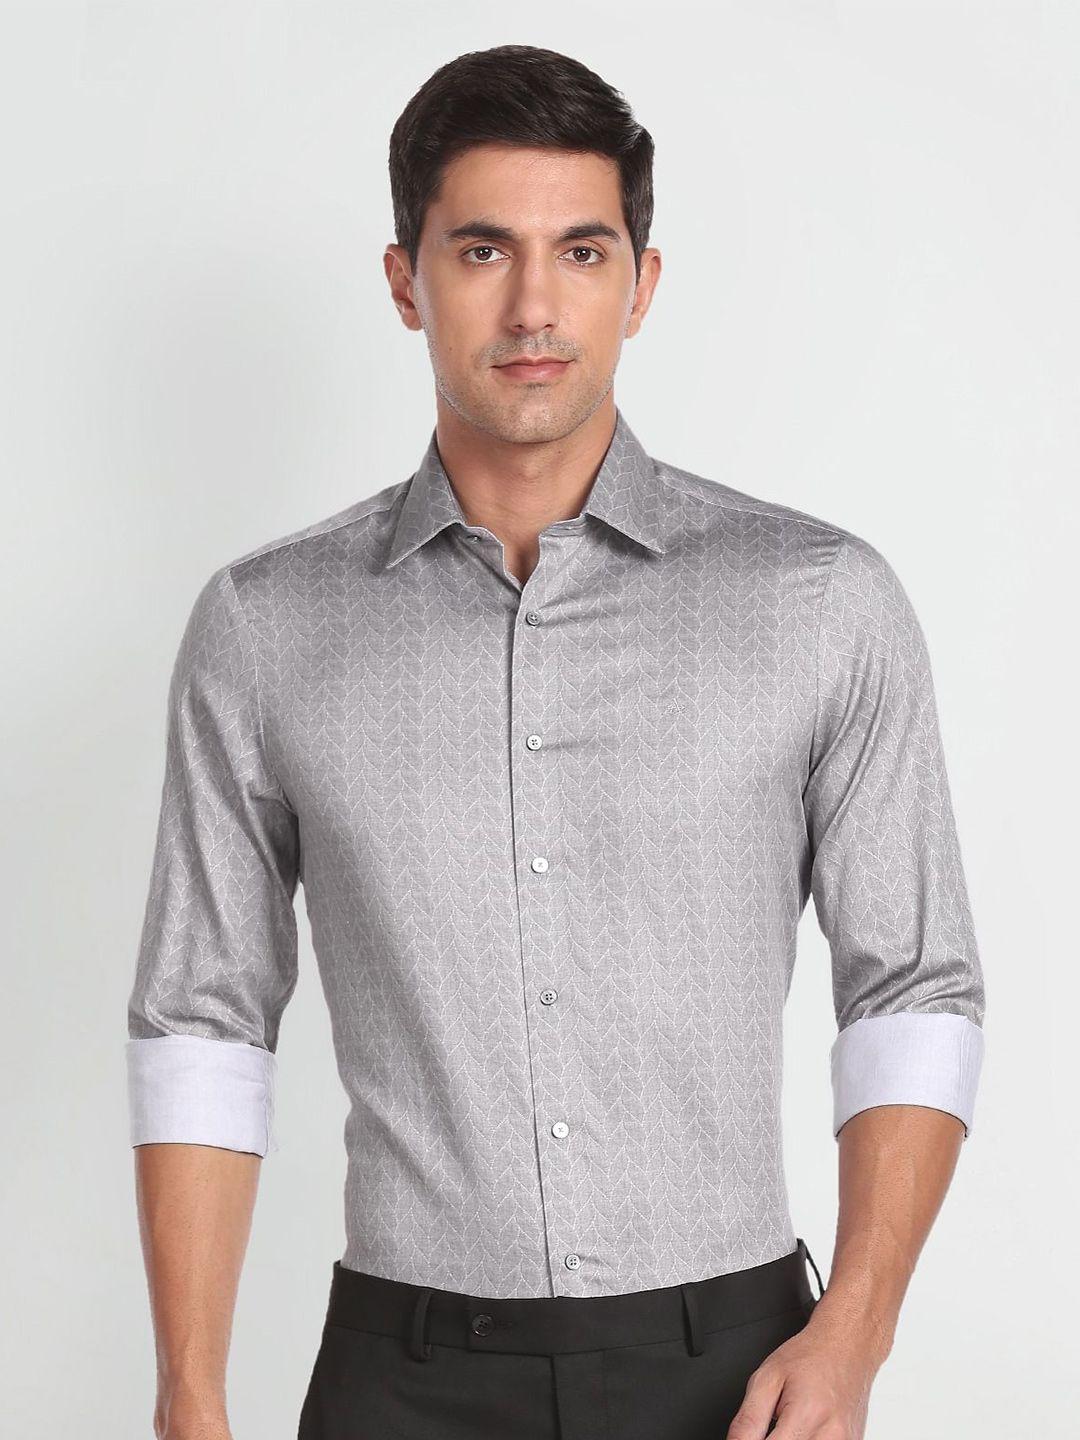 arrow geometric printed twill weave pure cotton formal shirt